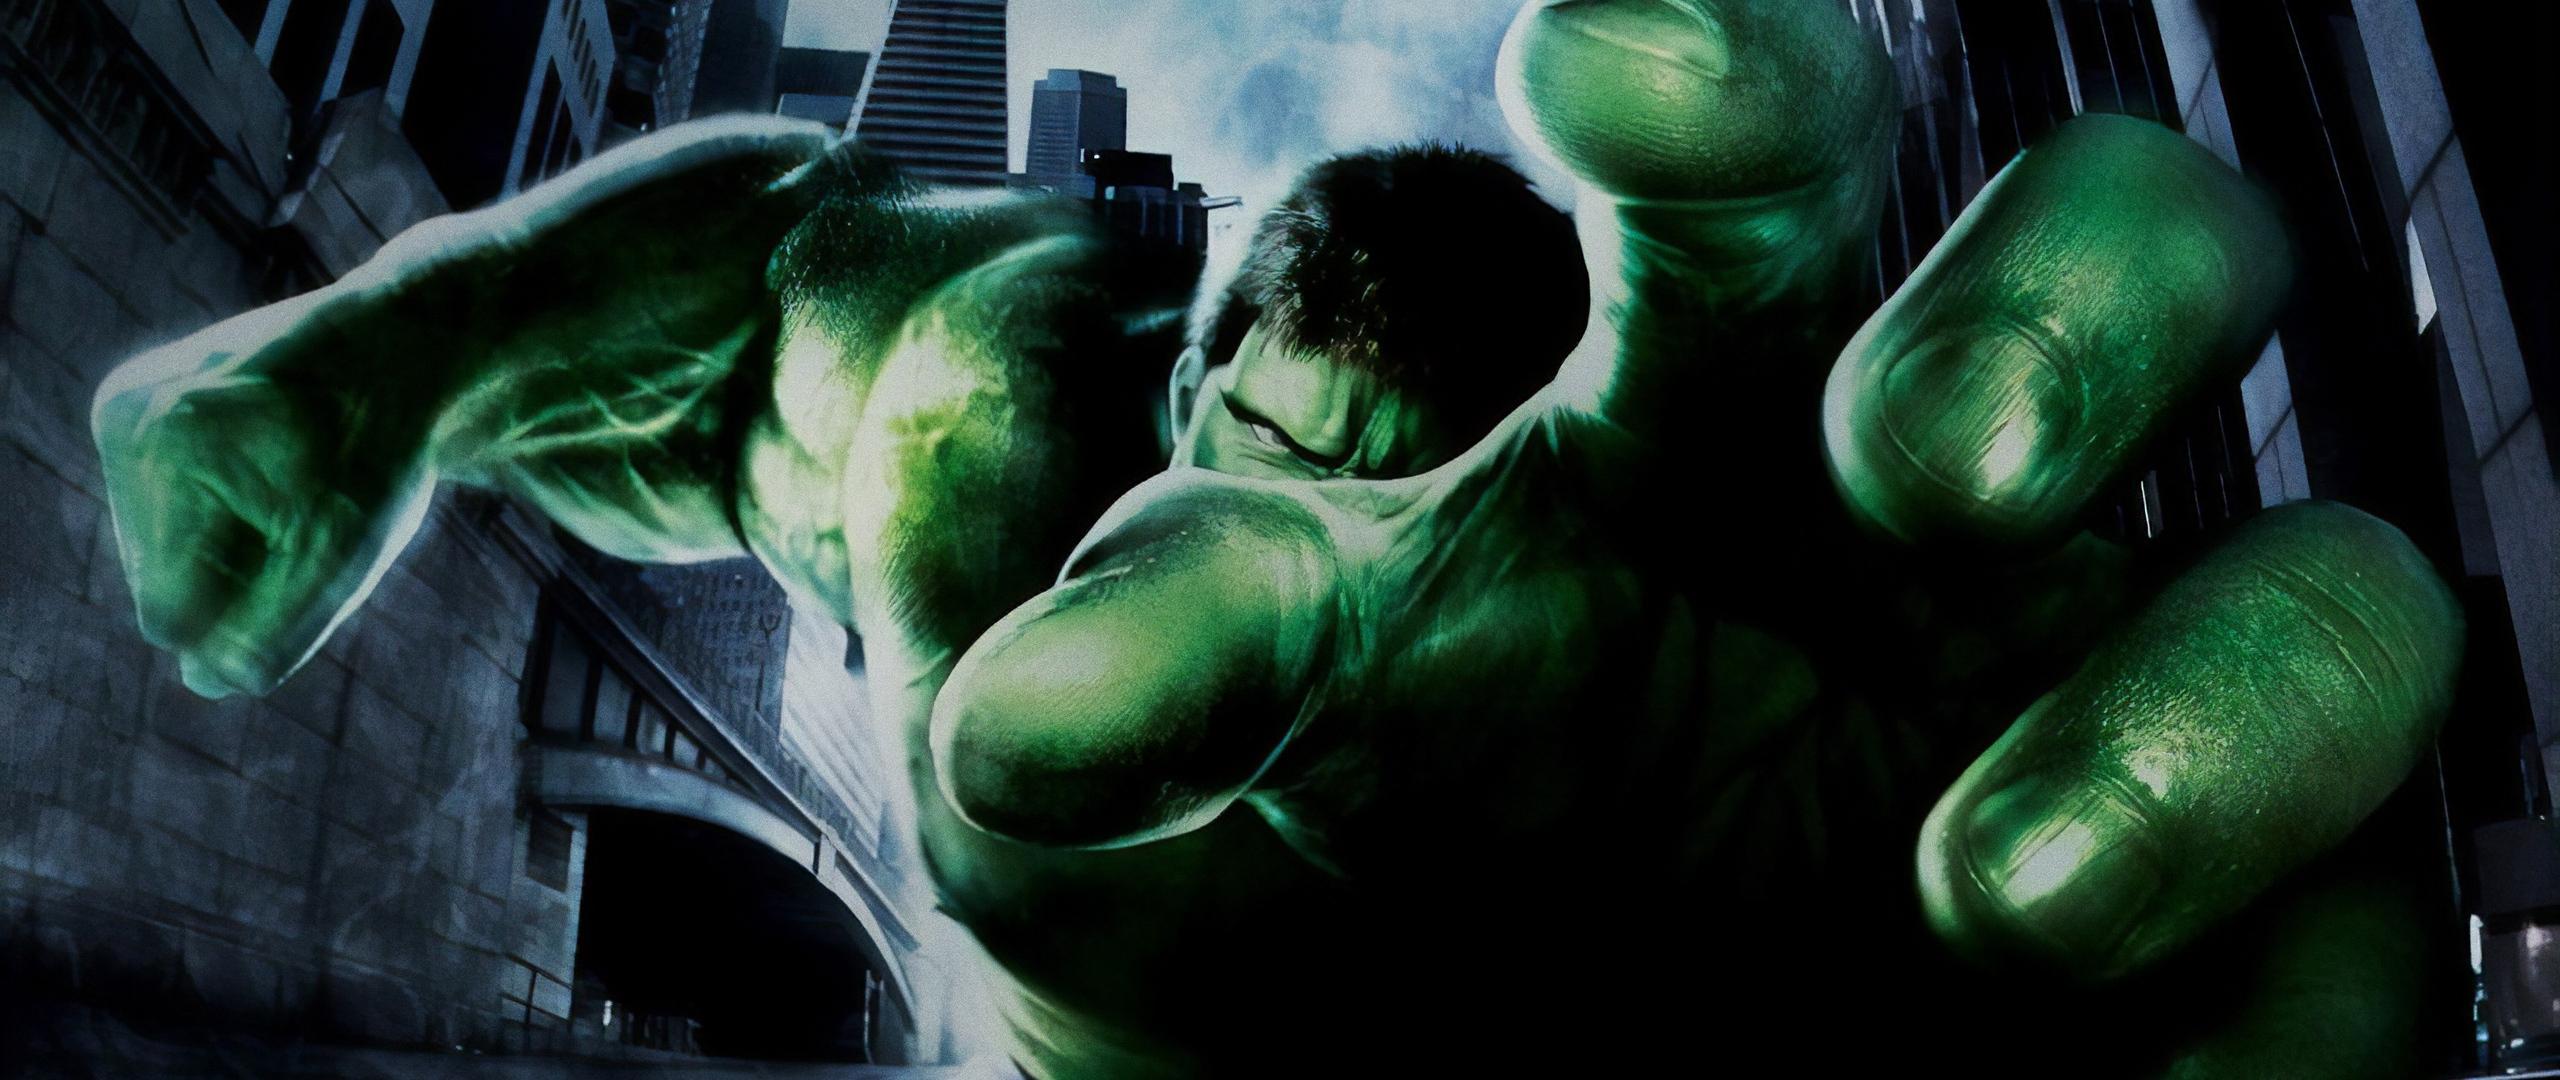 Hulk 2003 In 2560x1080 Resolution. hulk-2003-71.jpg. 